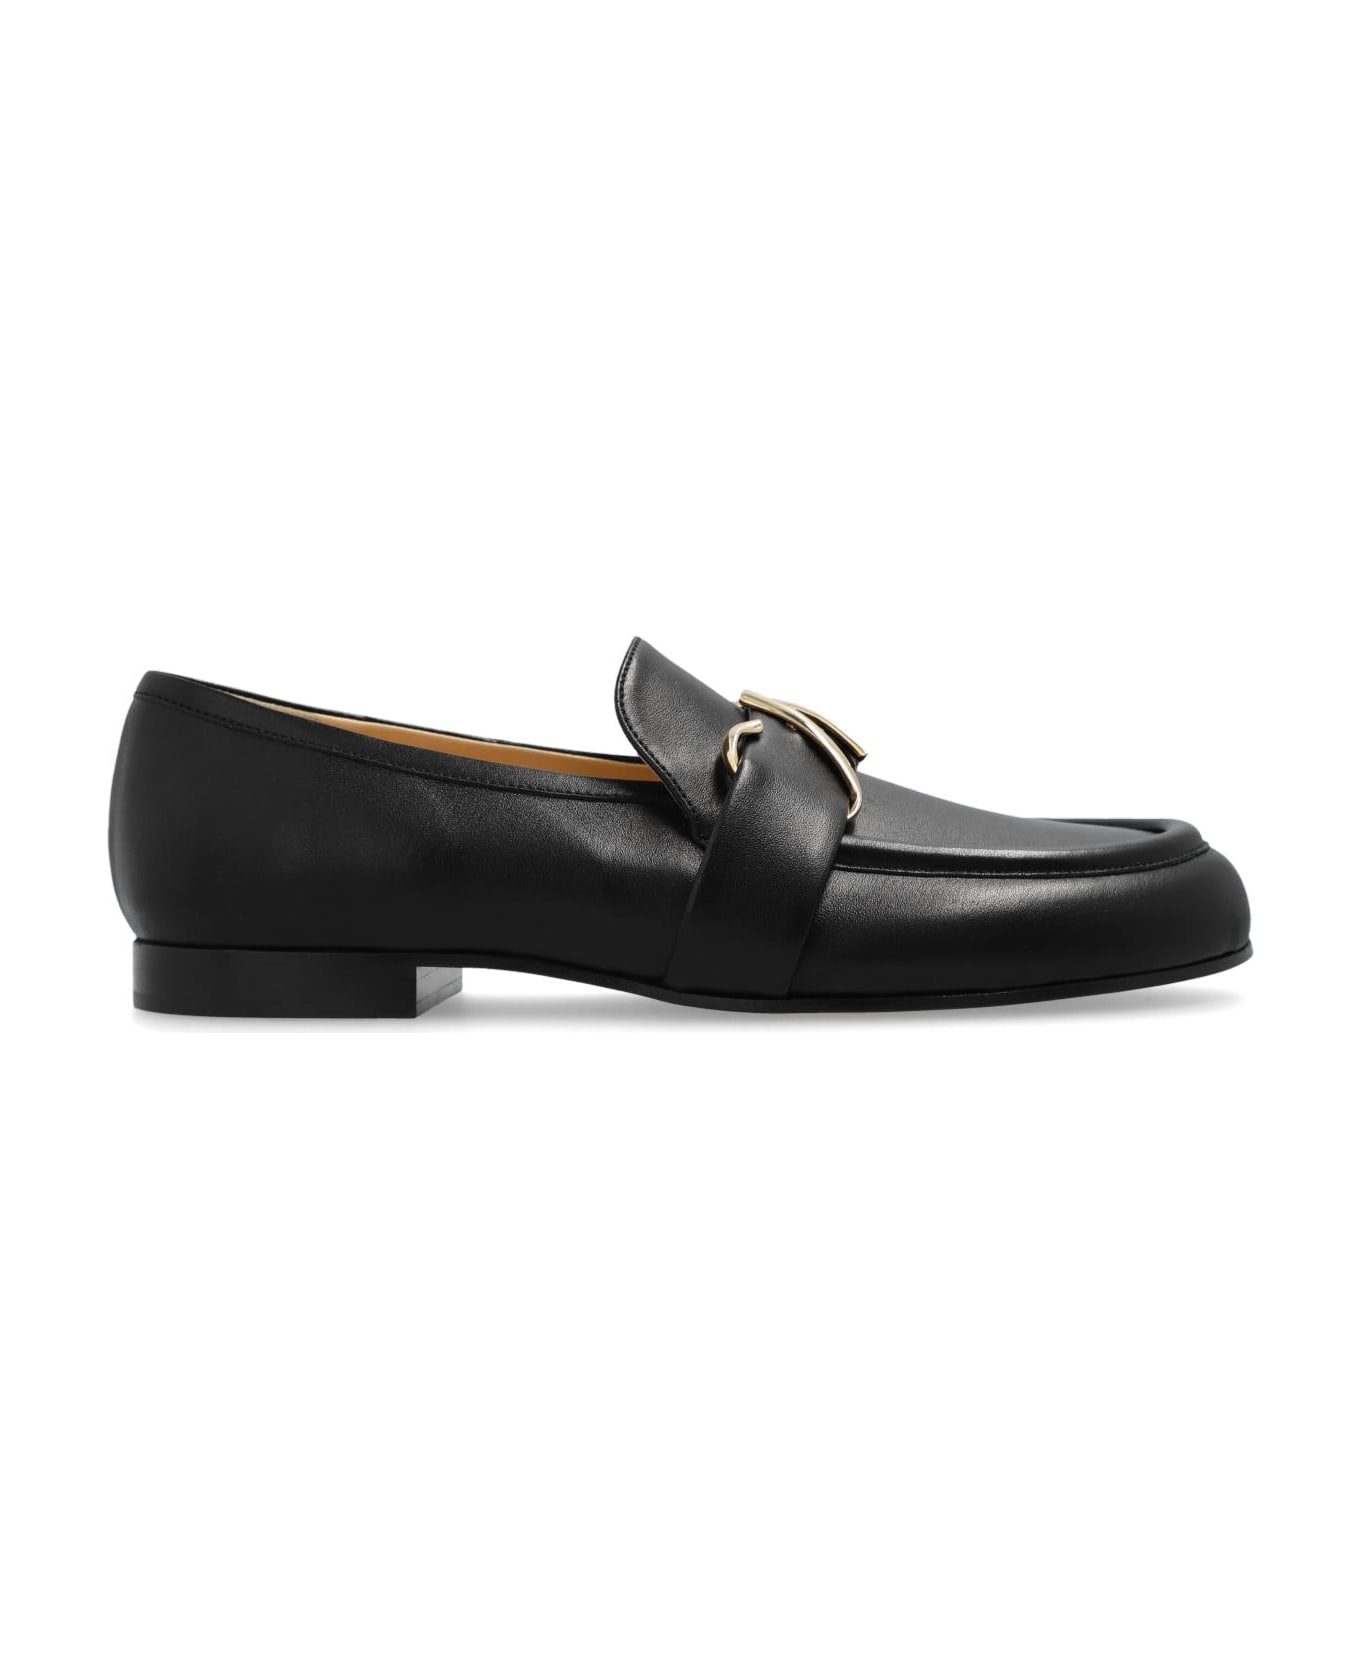 Proenza Schouler Leather Shoes - Black フラットシューズ